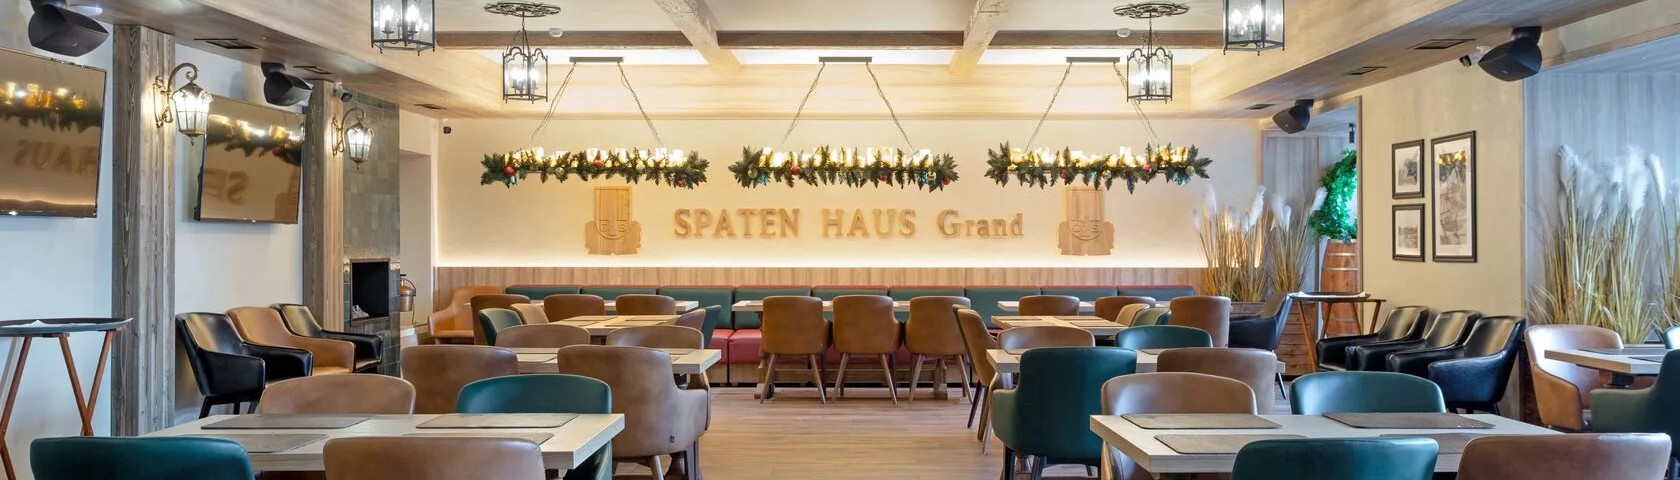 restoran_spaten_haus_grand